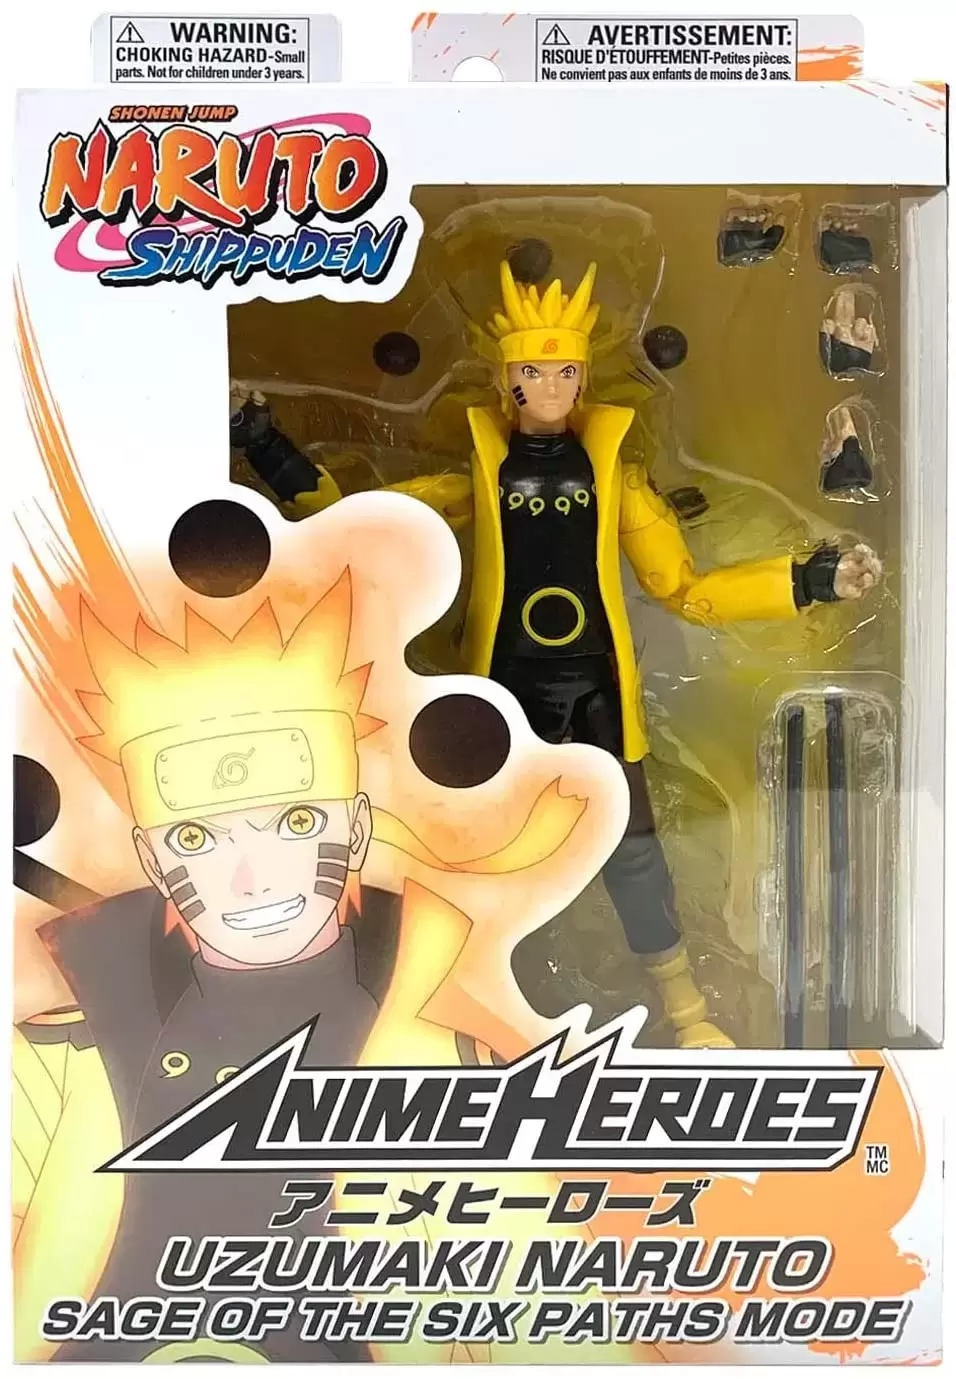 Anime Heroes - Bandai - Naruto Shippuden - Uzumaki Naruto Sage of the six paths mode